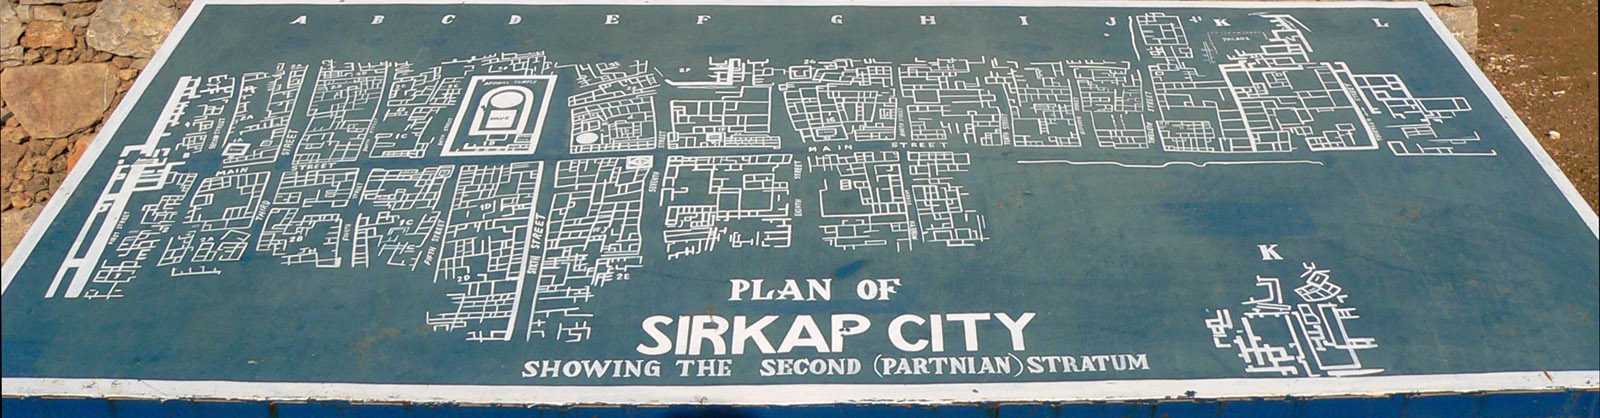 Sirkap City Plan - Taxila - 384.jpg